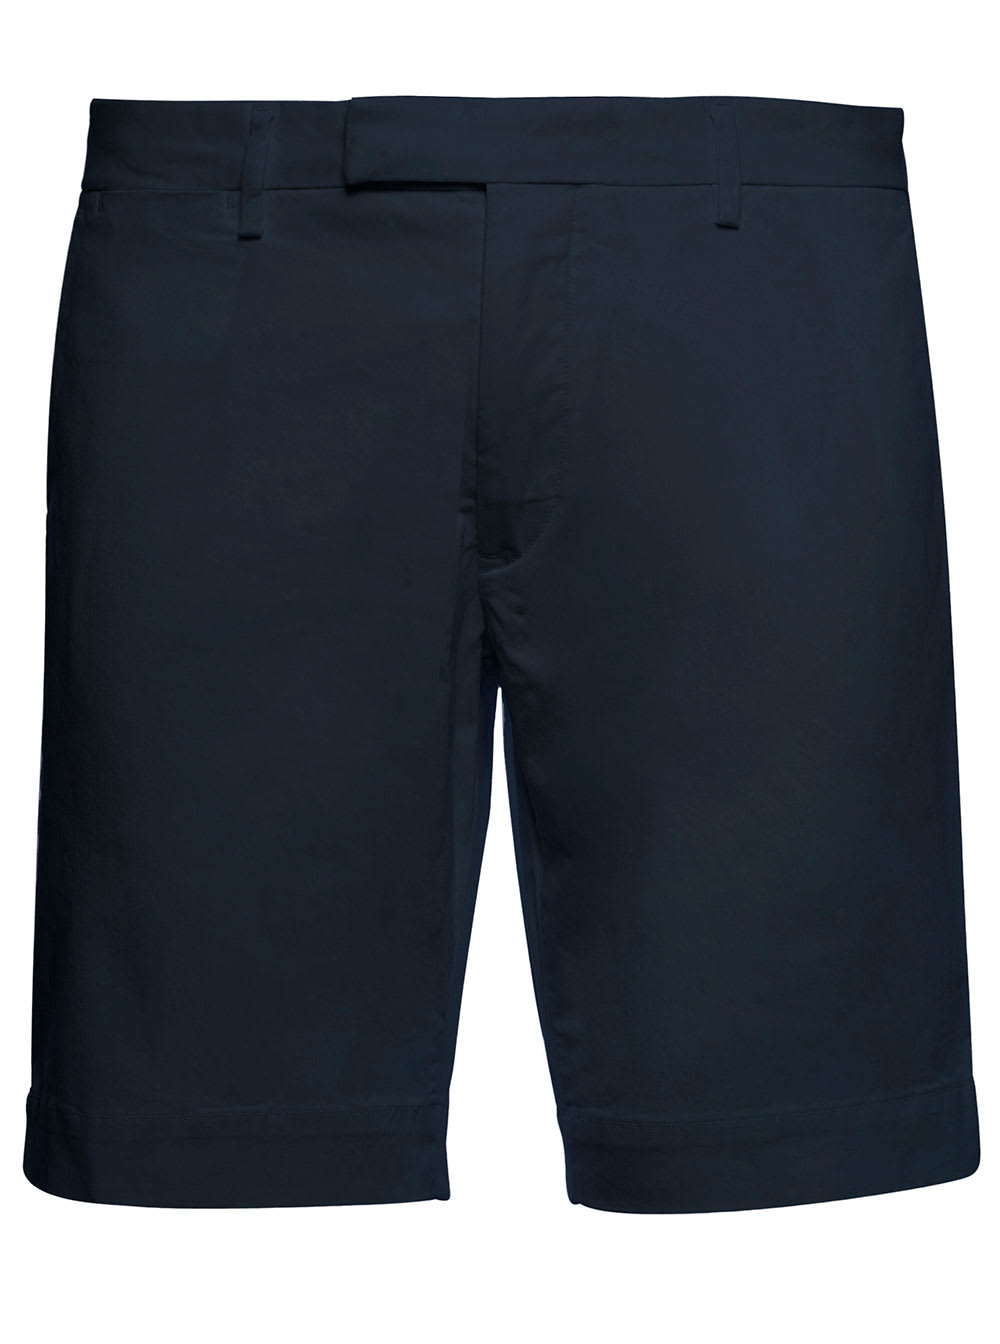 Mens Beige Cotton Bermuda Shorts